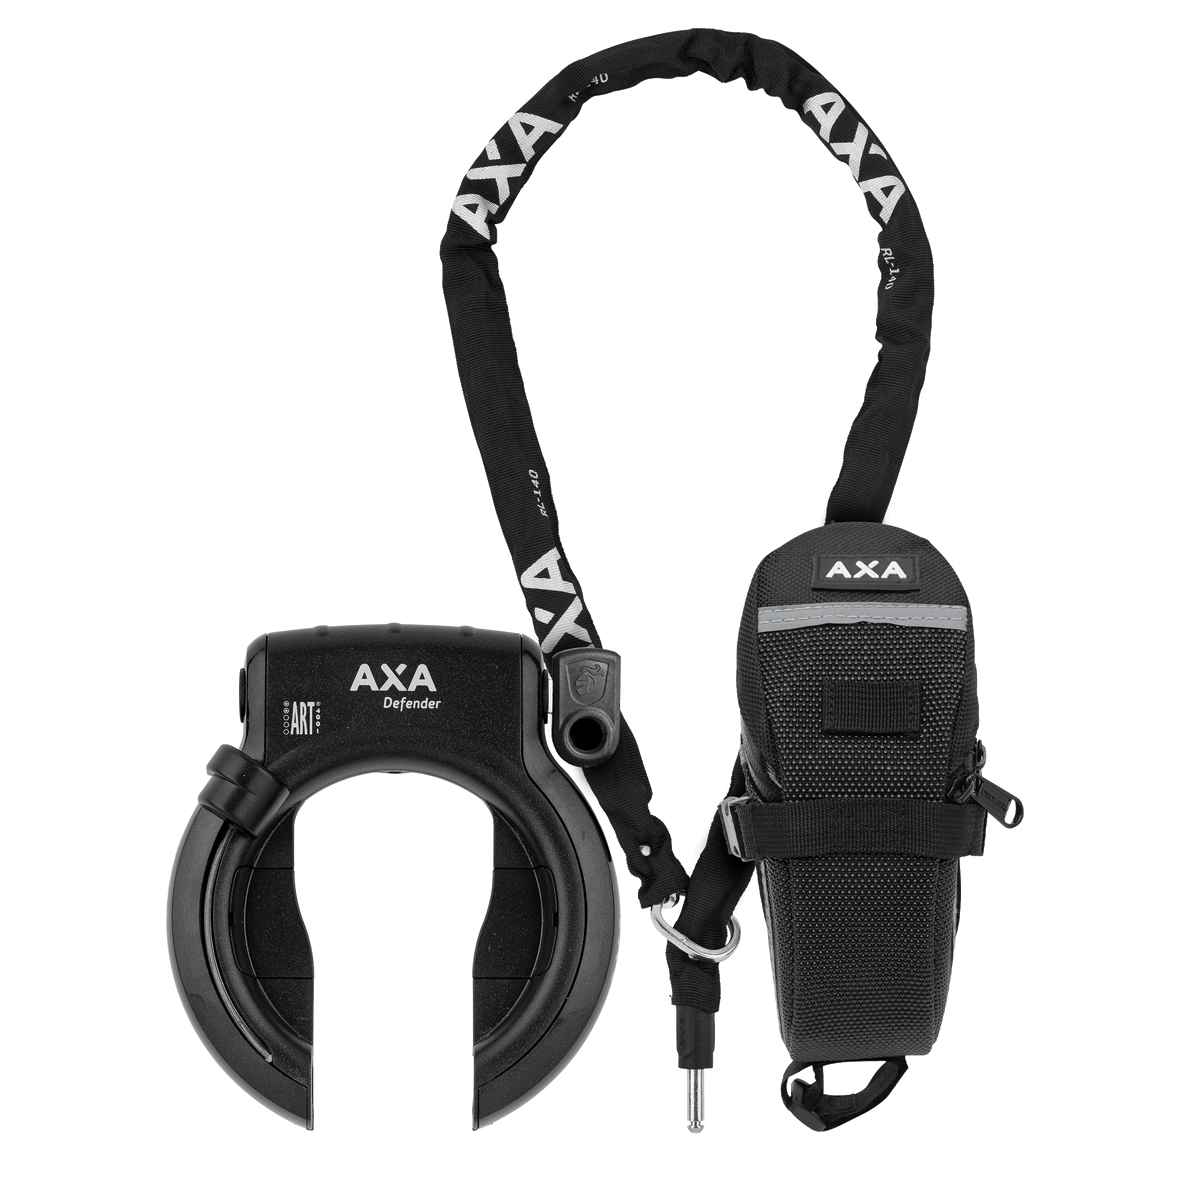 AXA Defender + RLC 140 + bag set